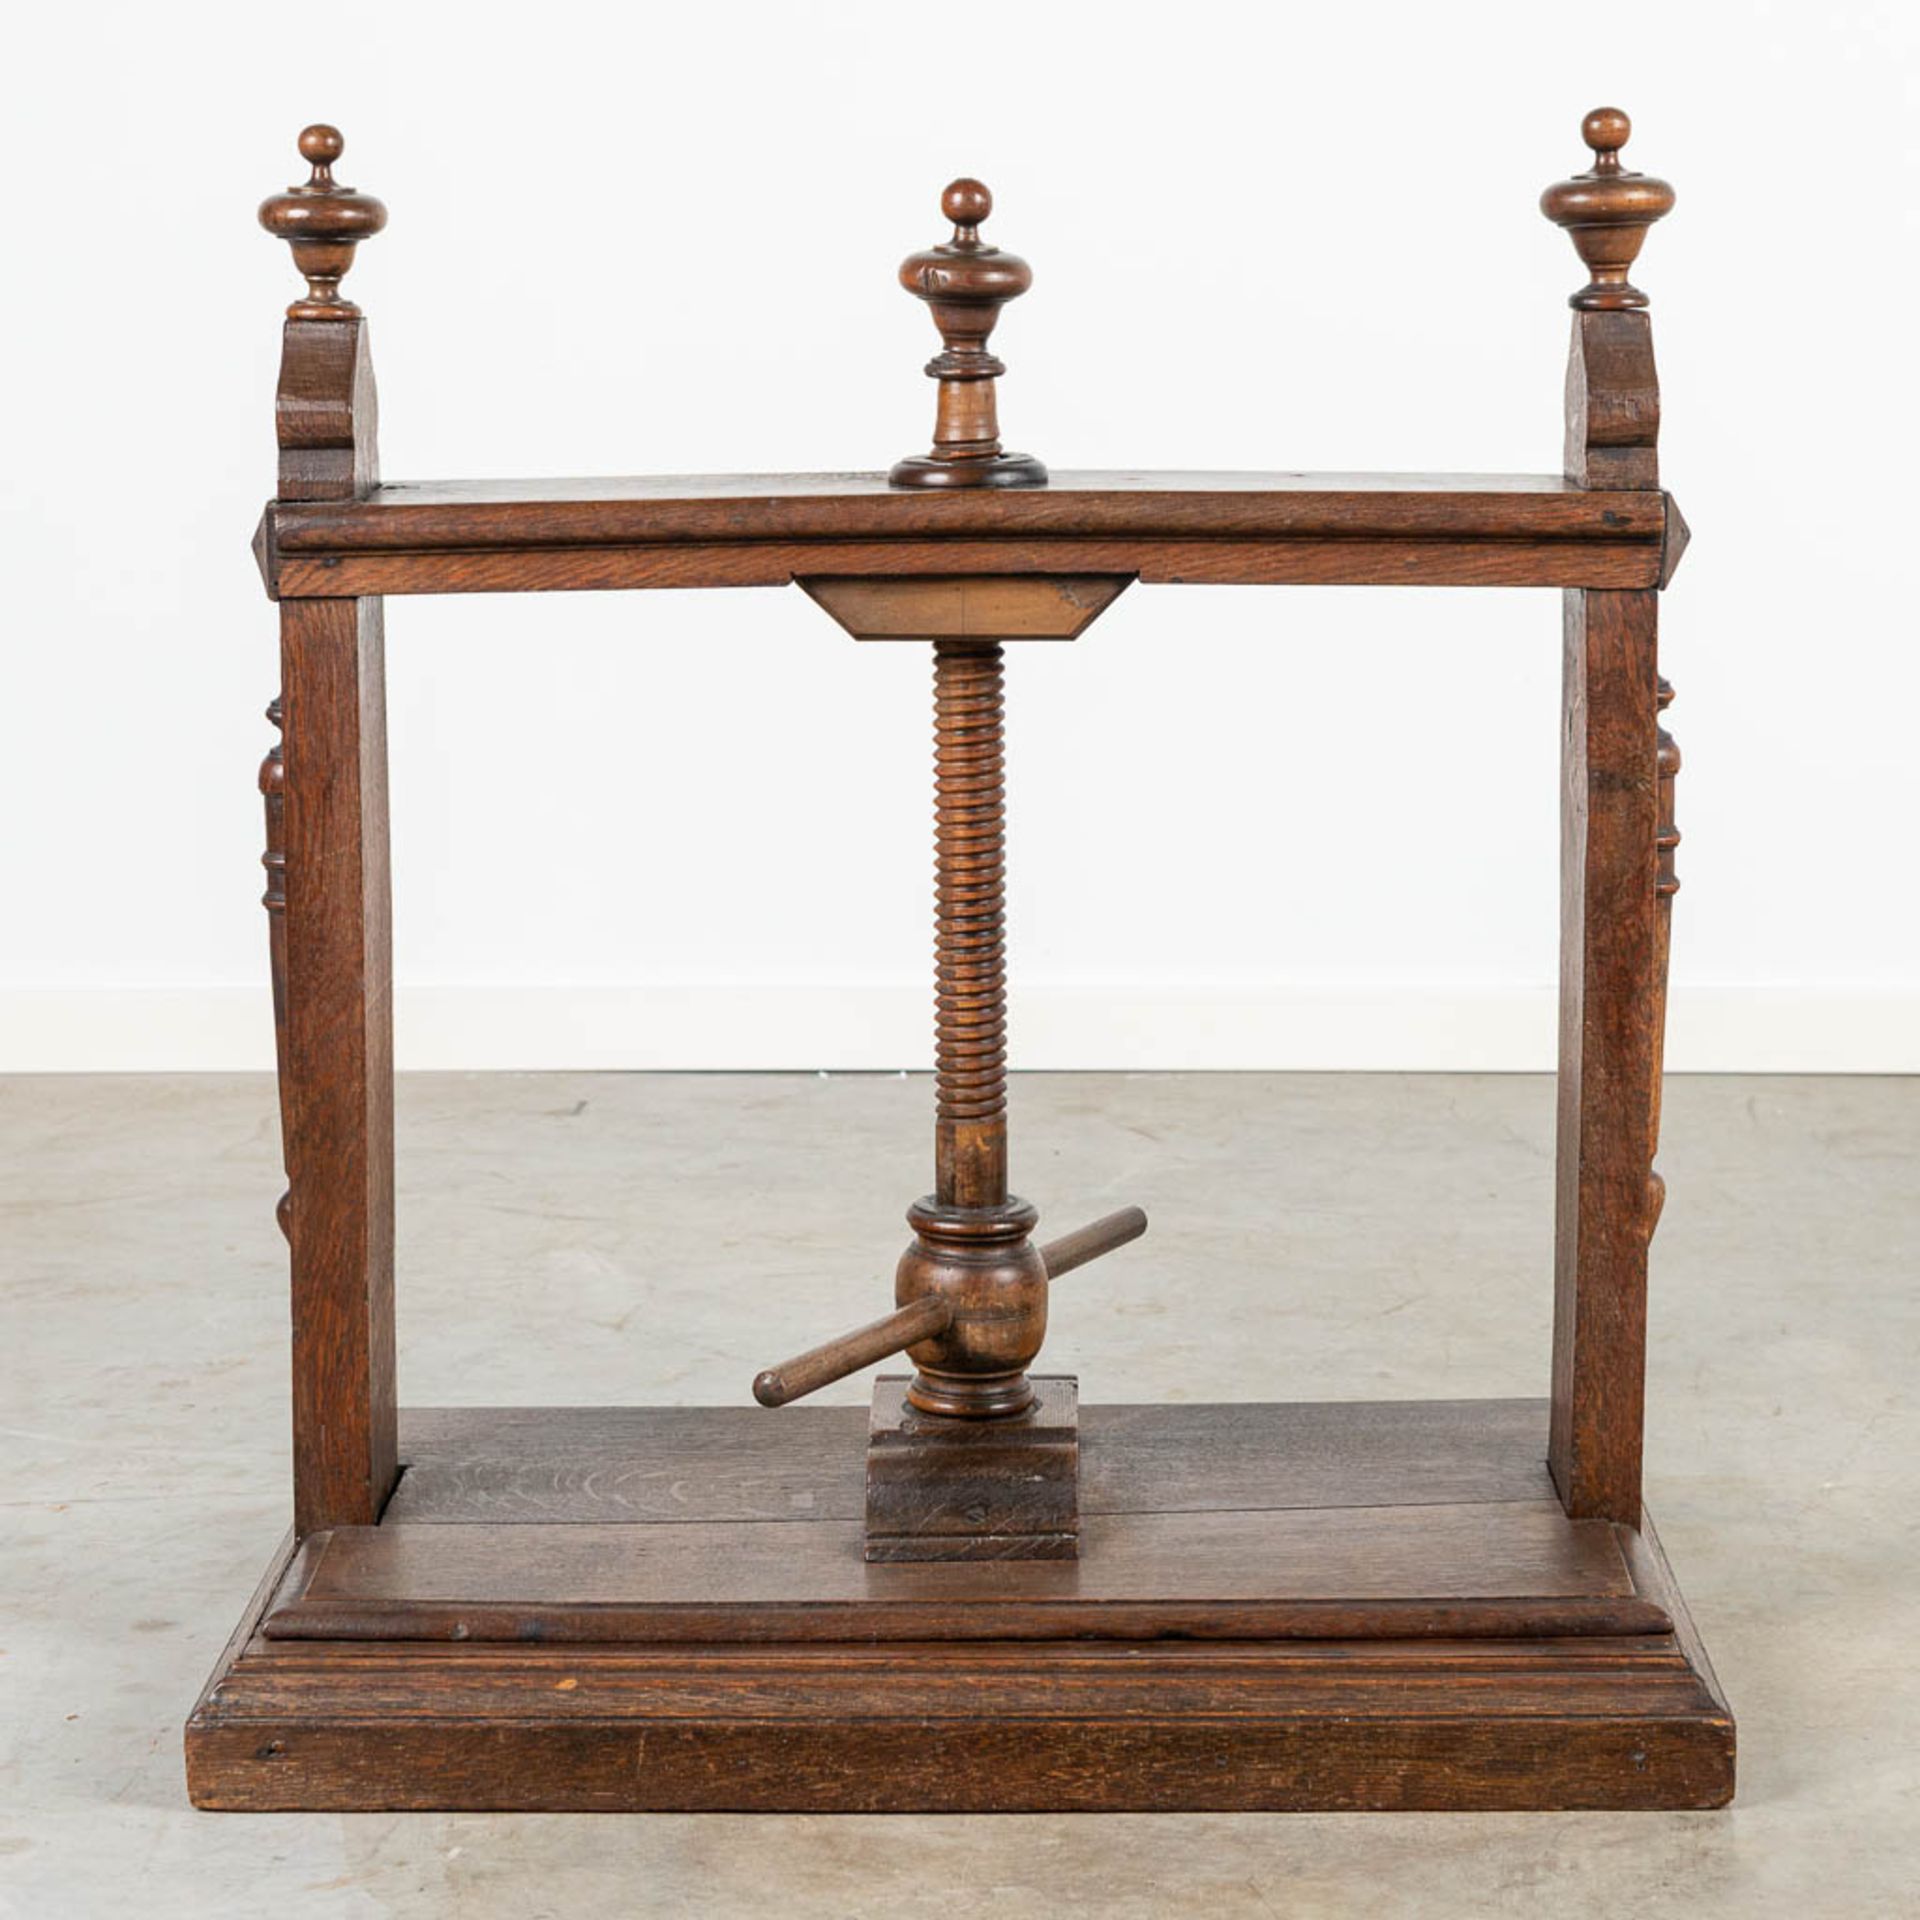 An antique linnen or book press, made of wood.